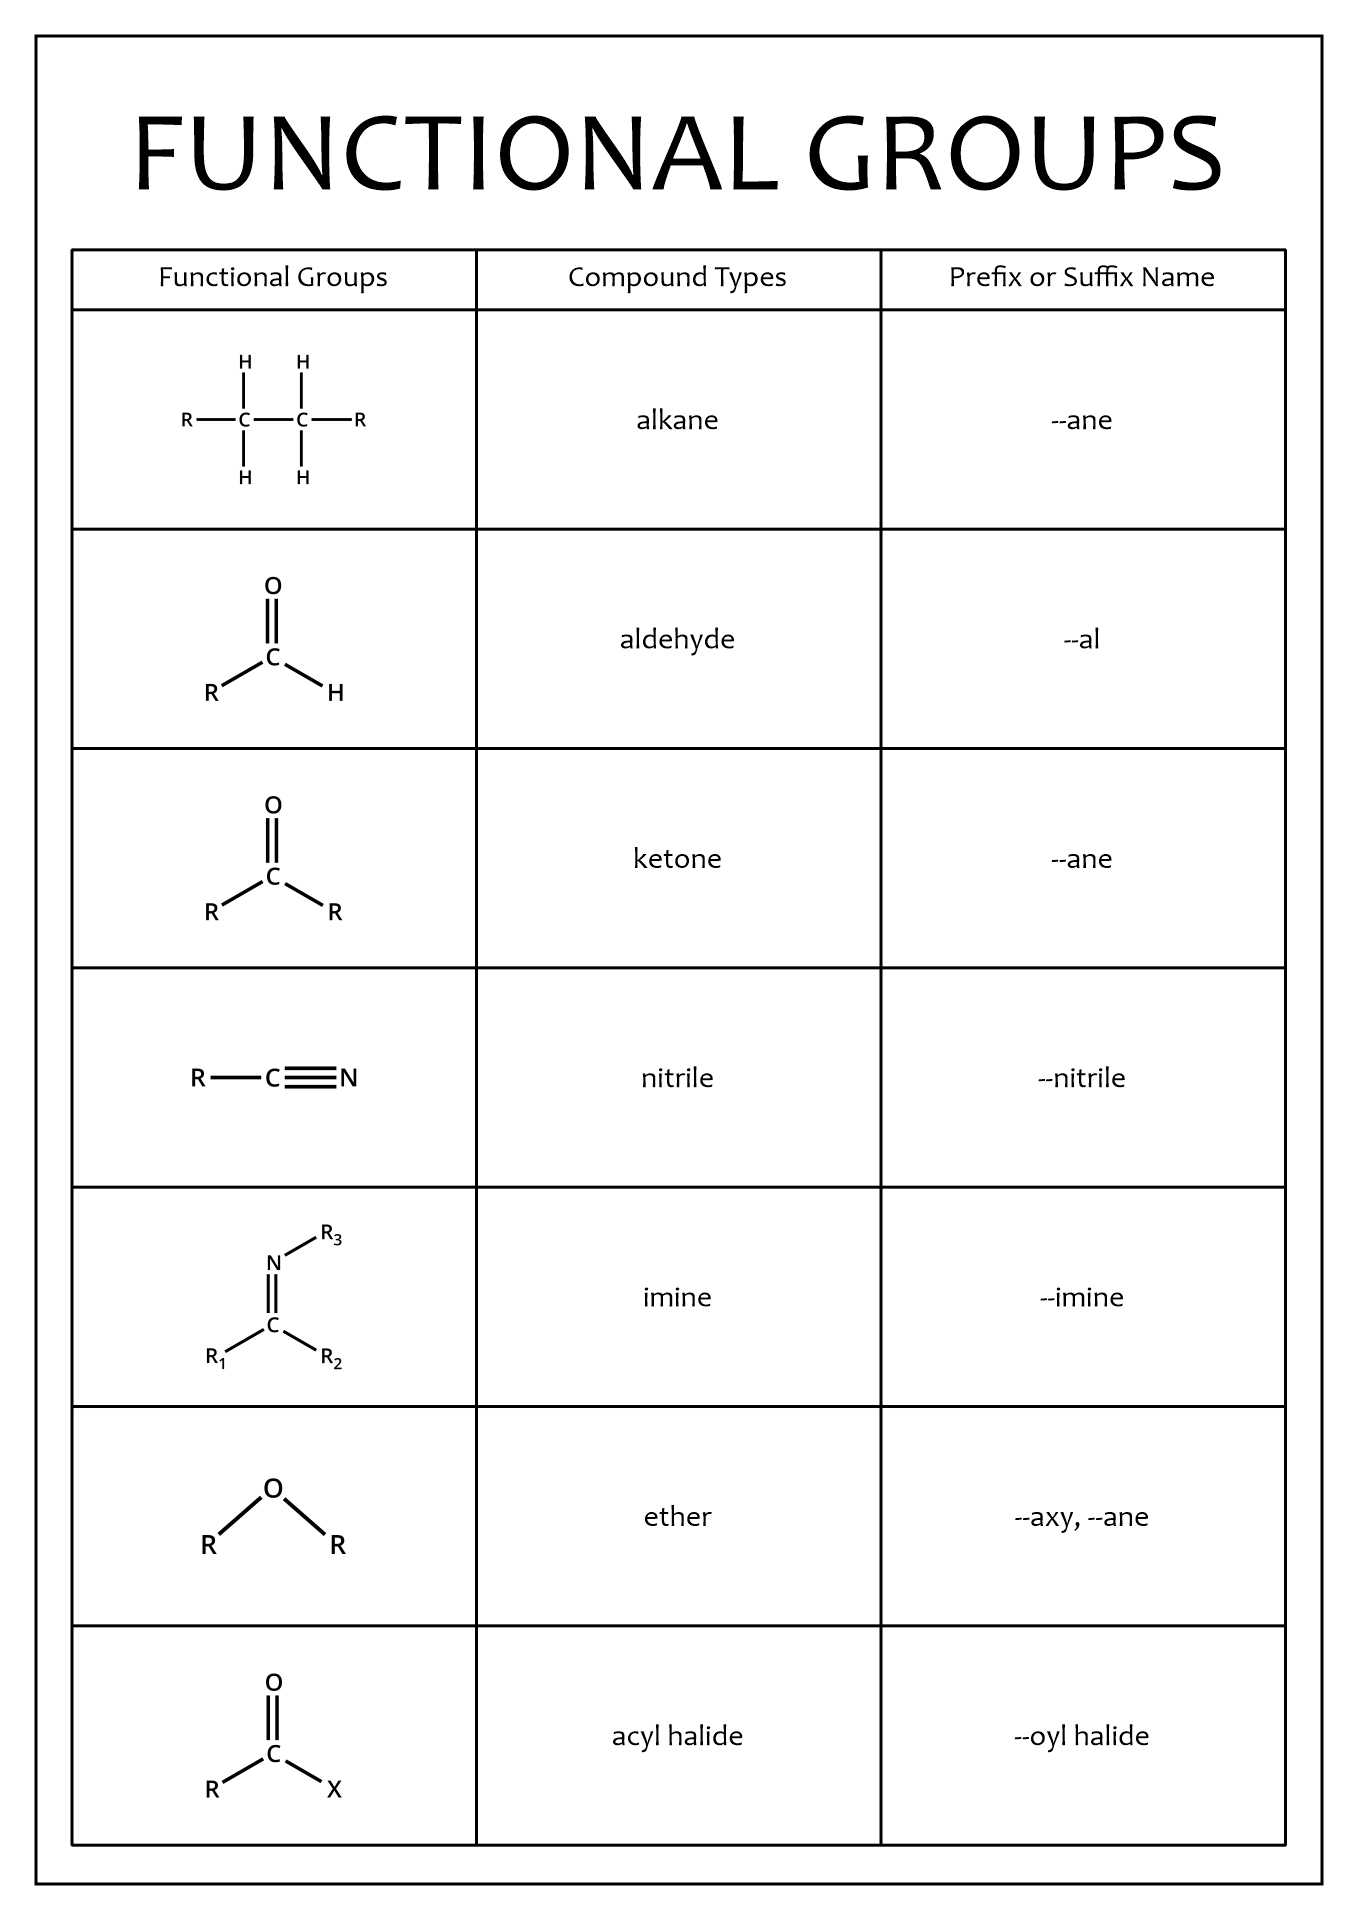 Organic Chemistry Functional Groups